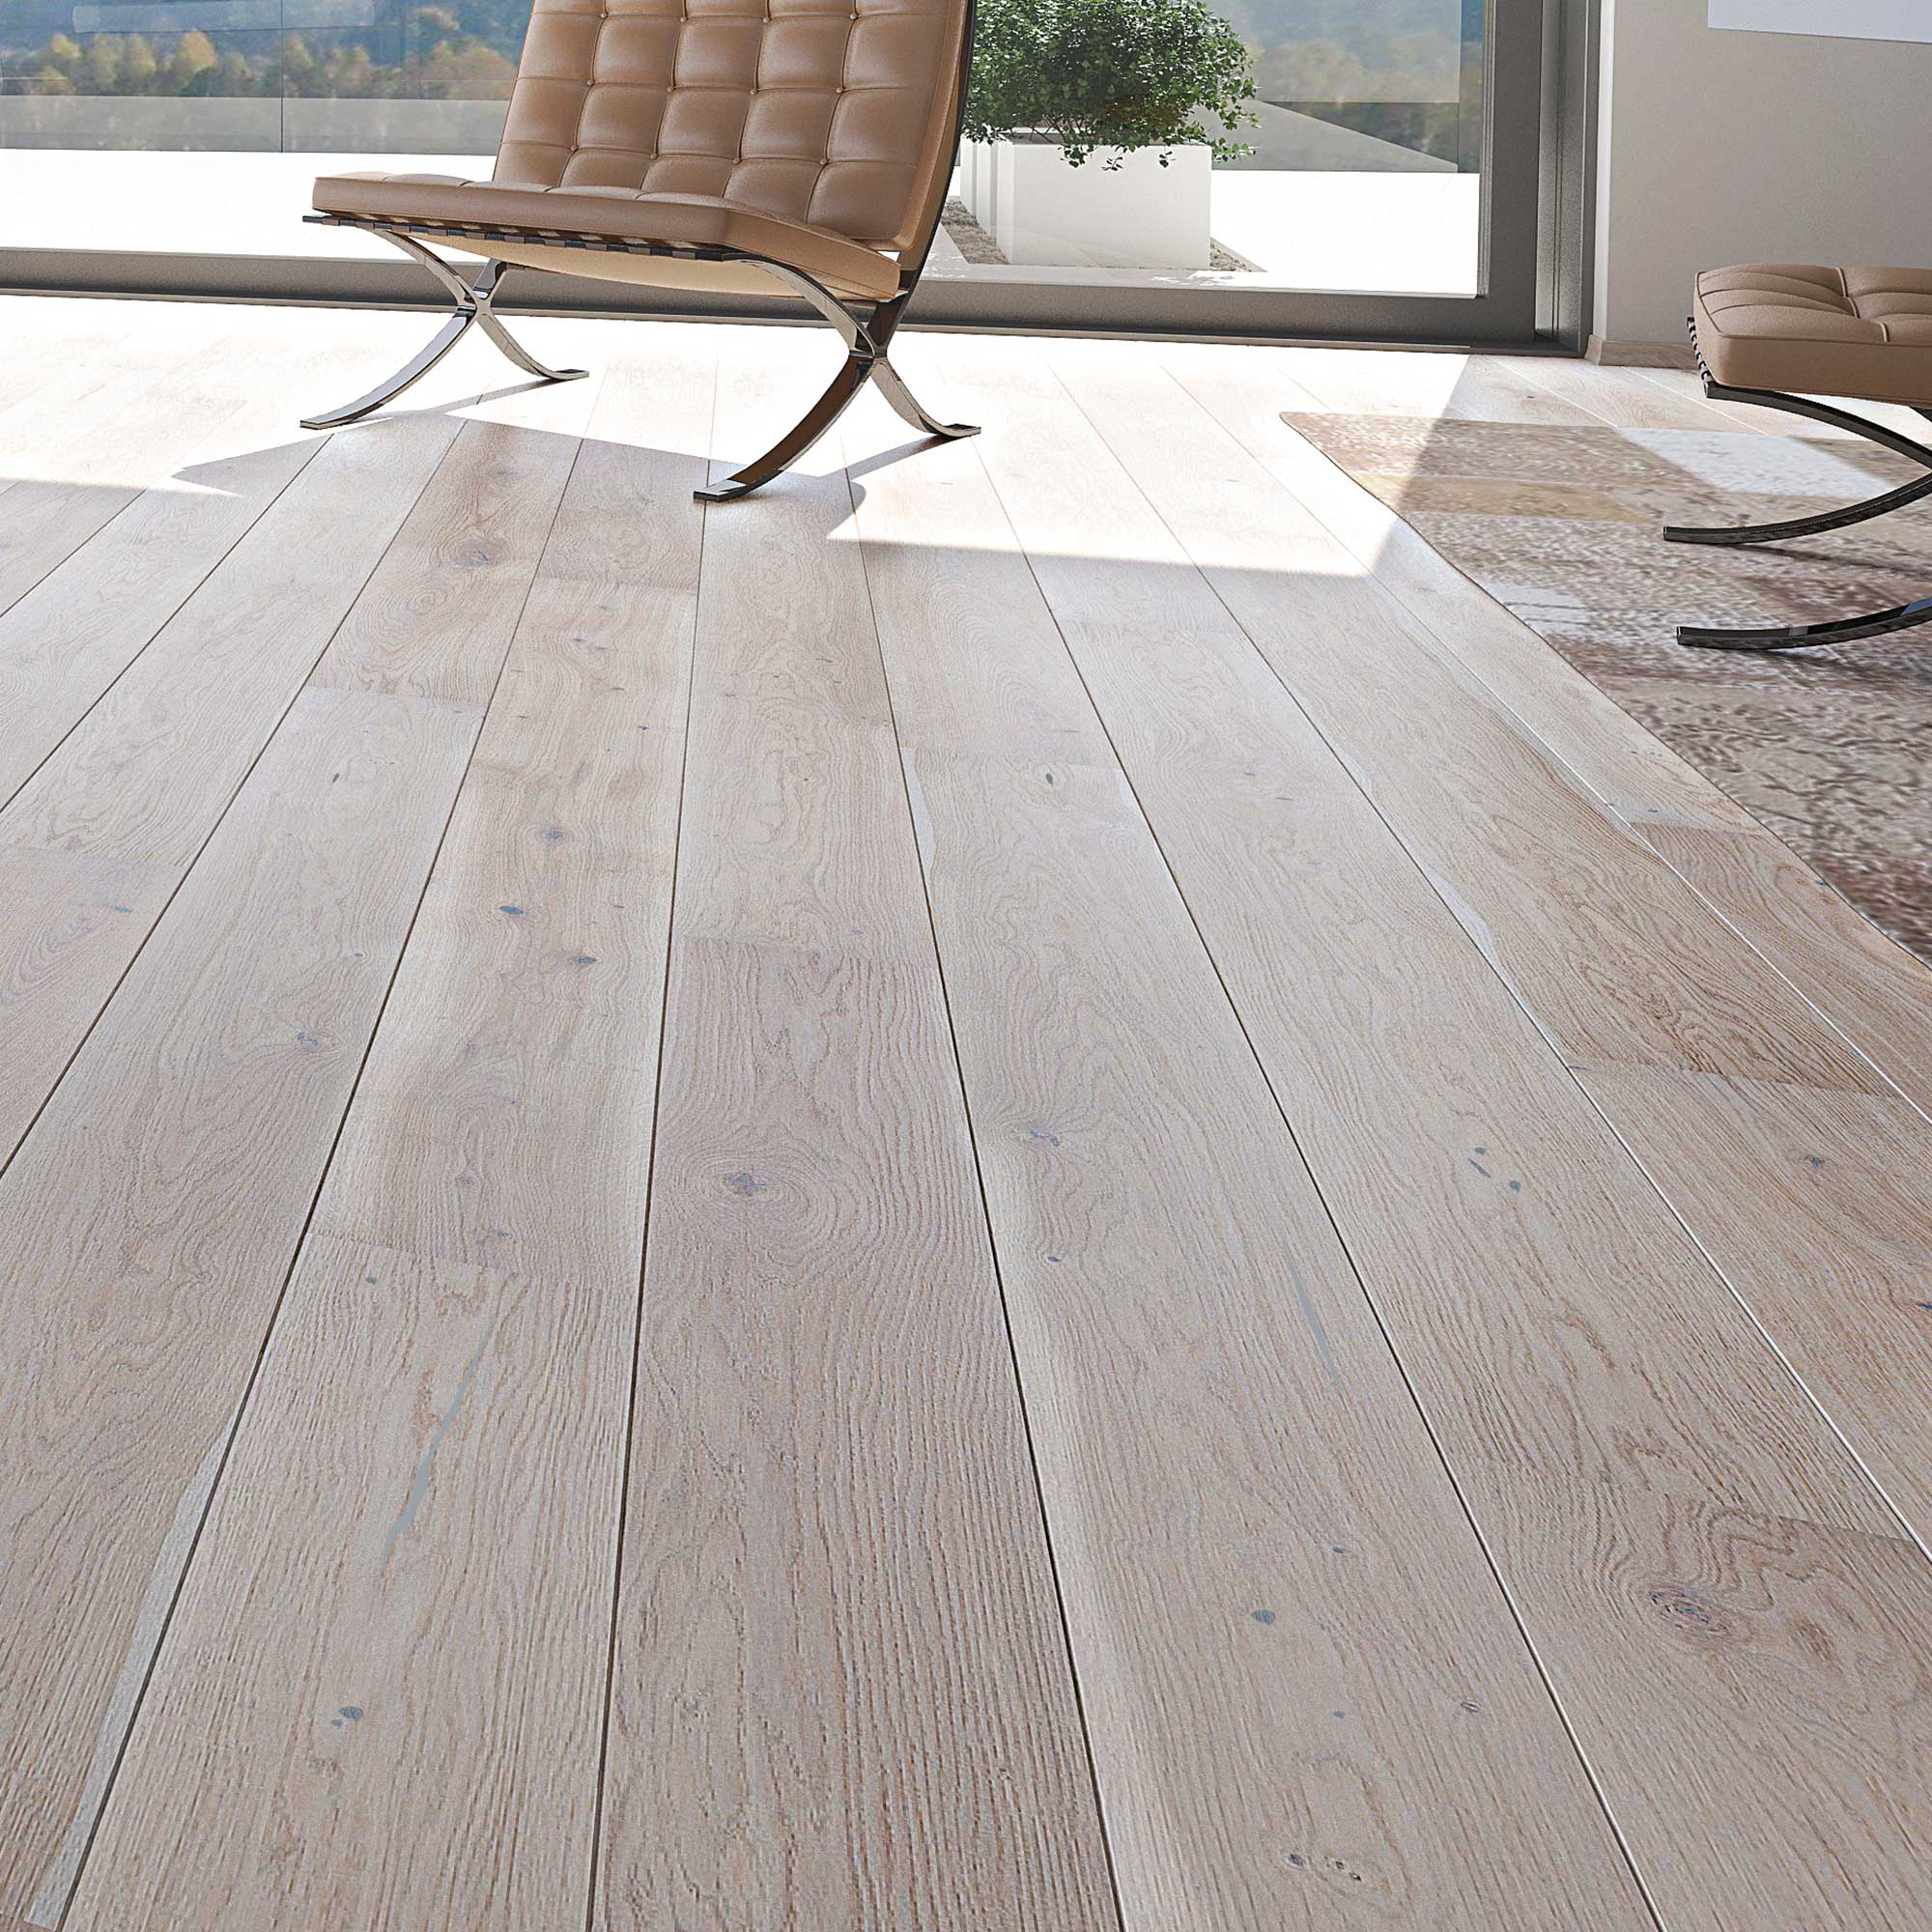 AL106 Marsh Grey Oak - Brushed & Matt Lacquered Rustic Oak Wooden Floor